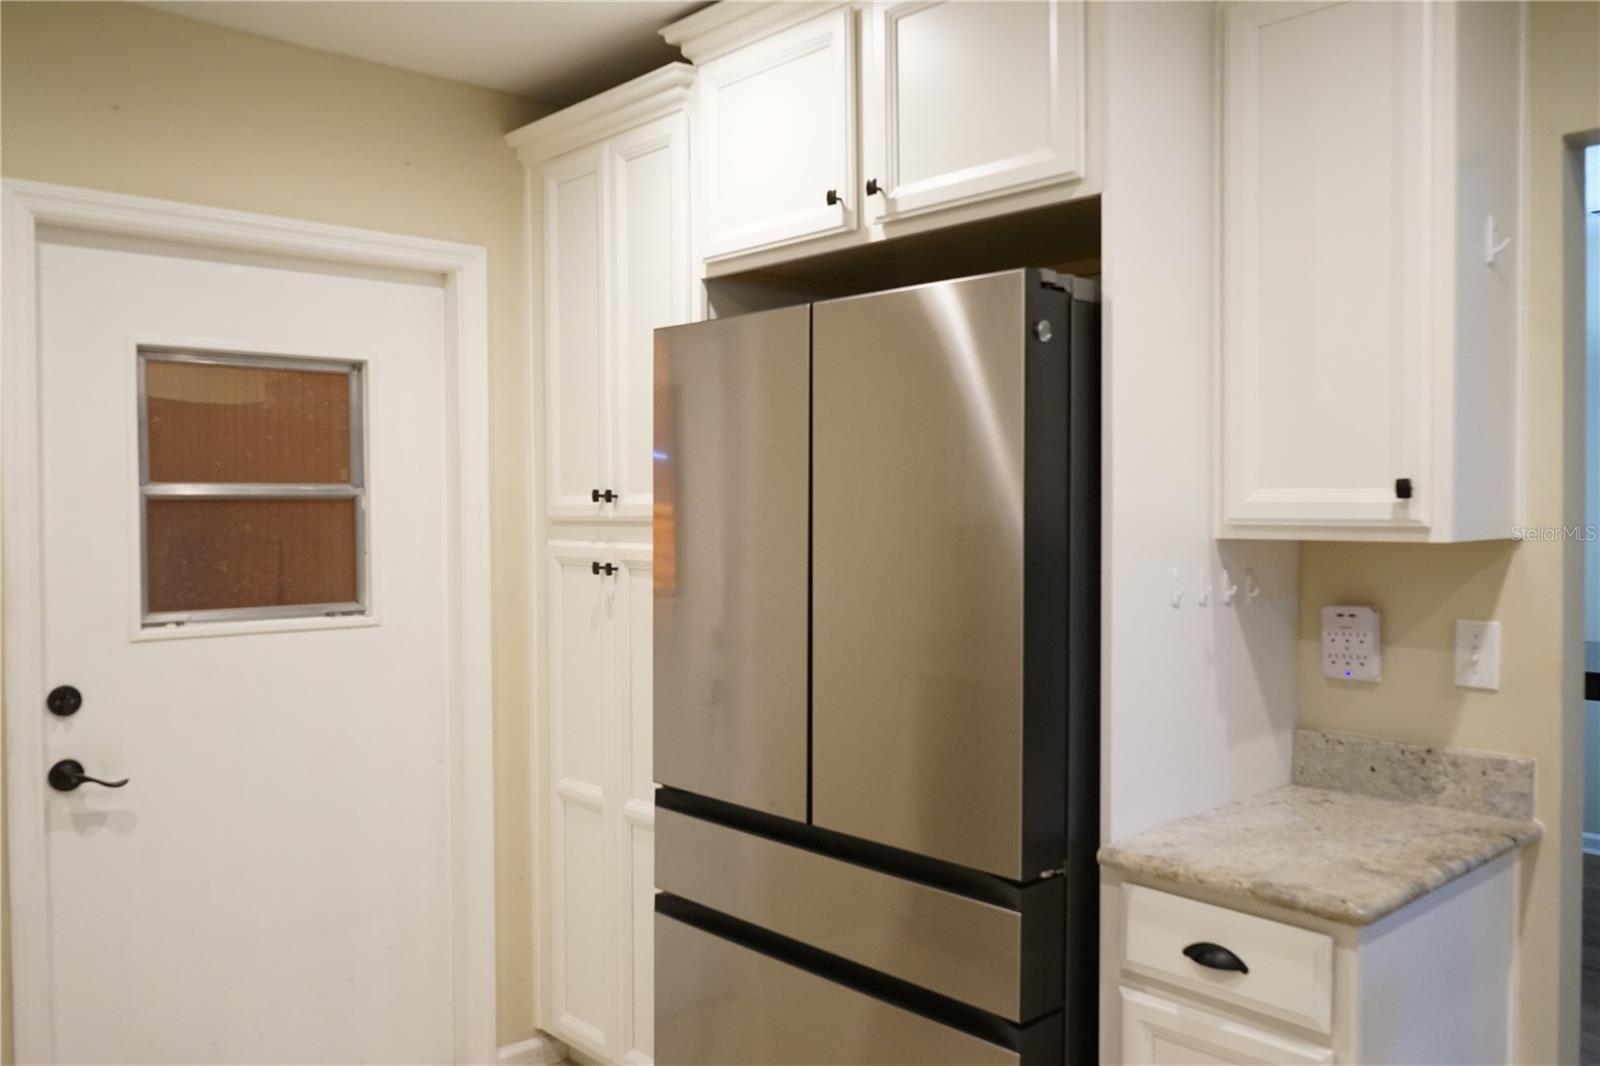 pantry next to fridge, granite tops